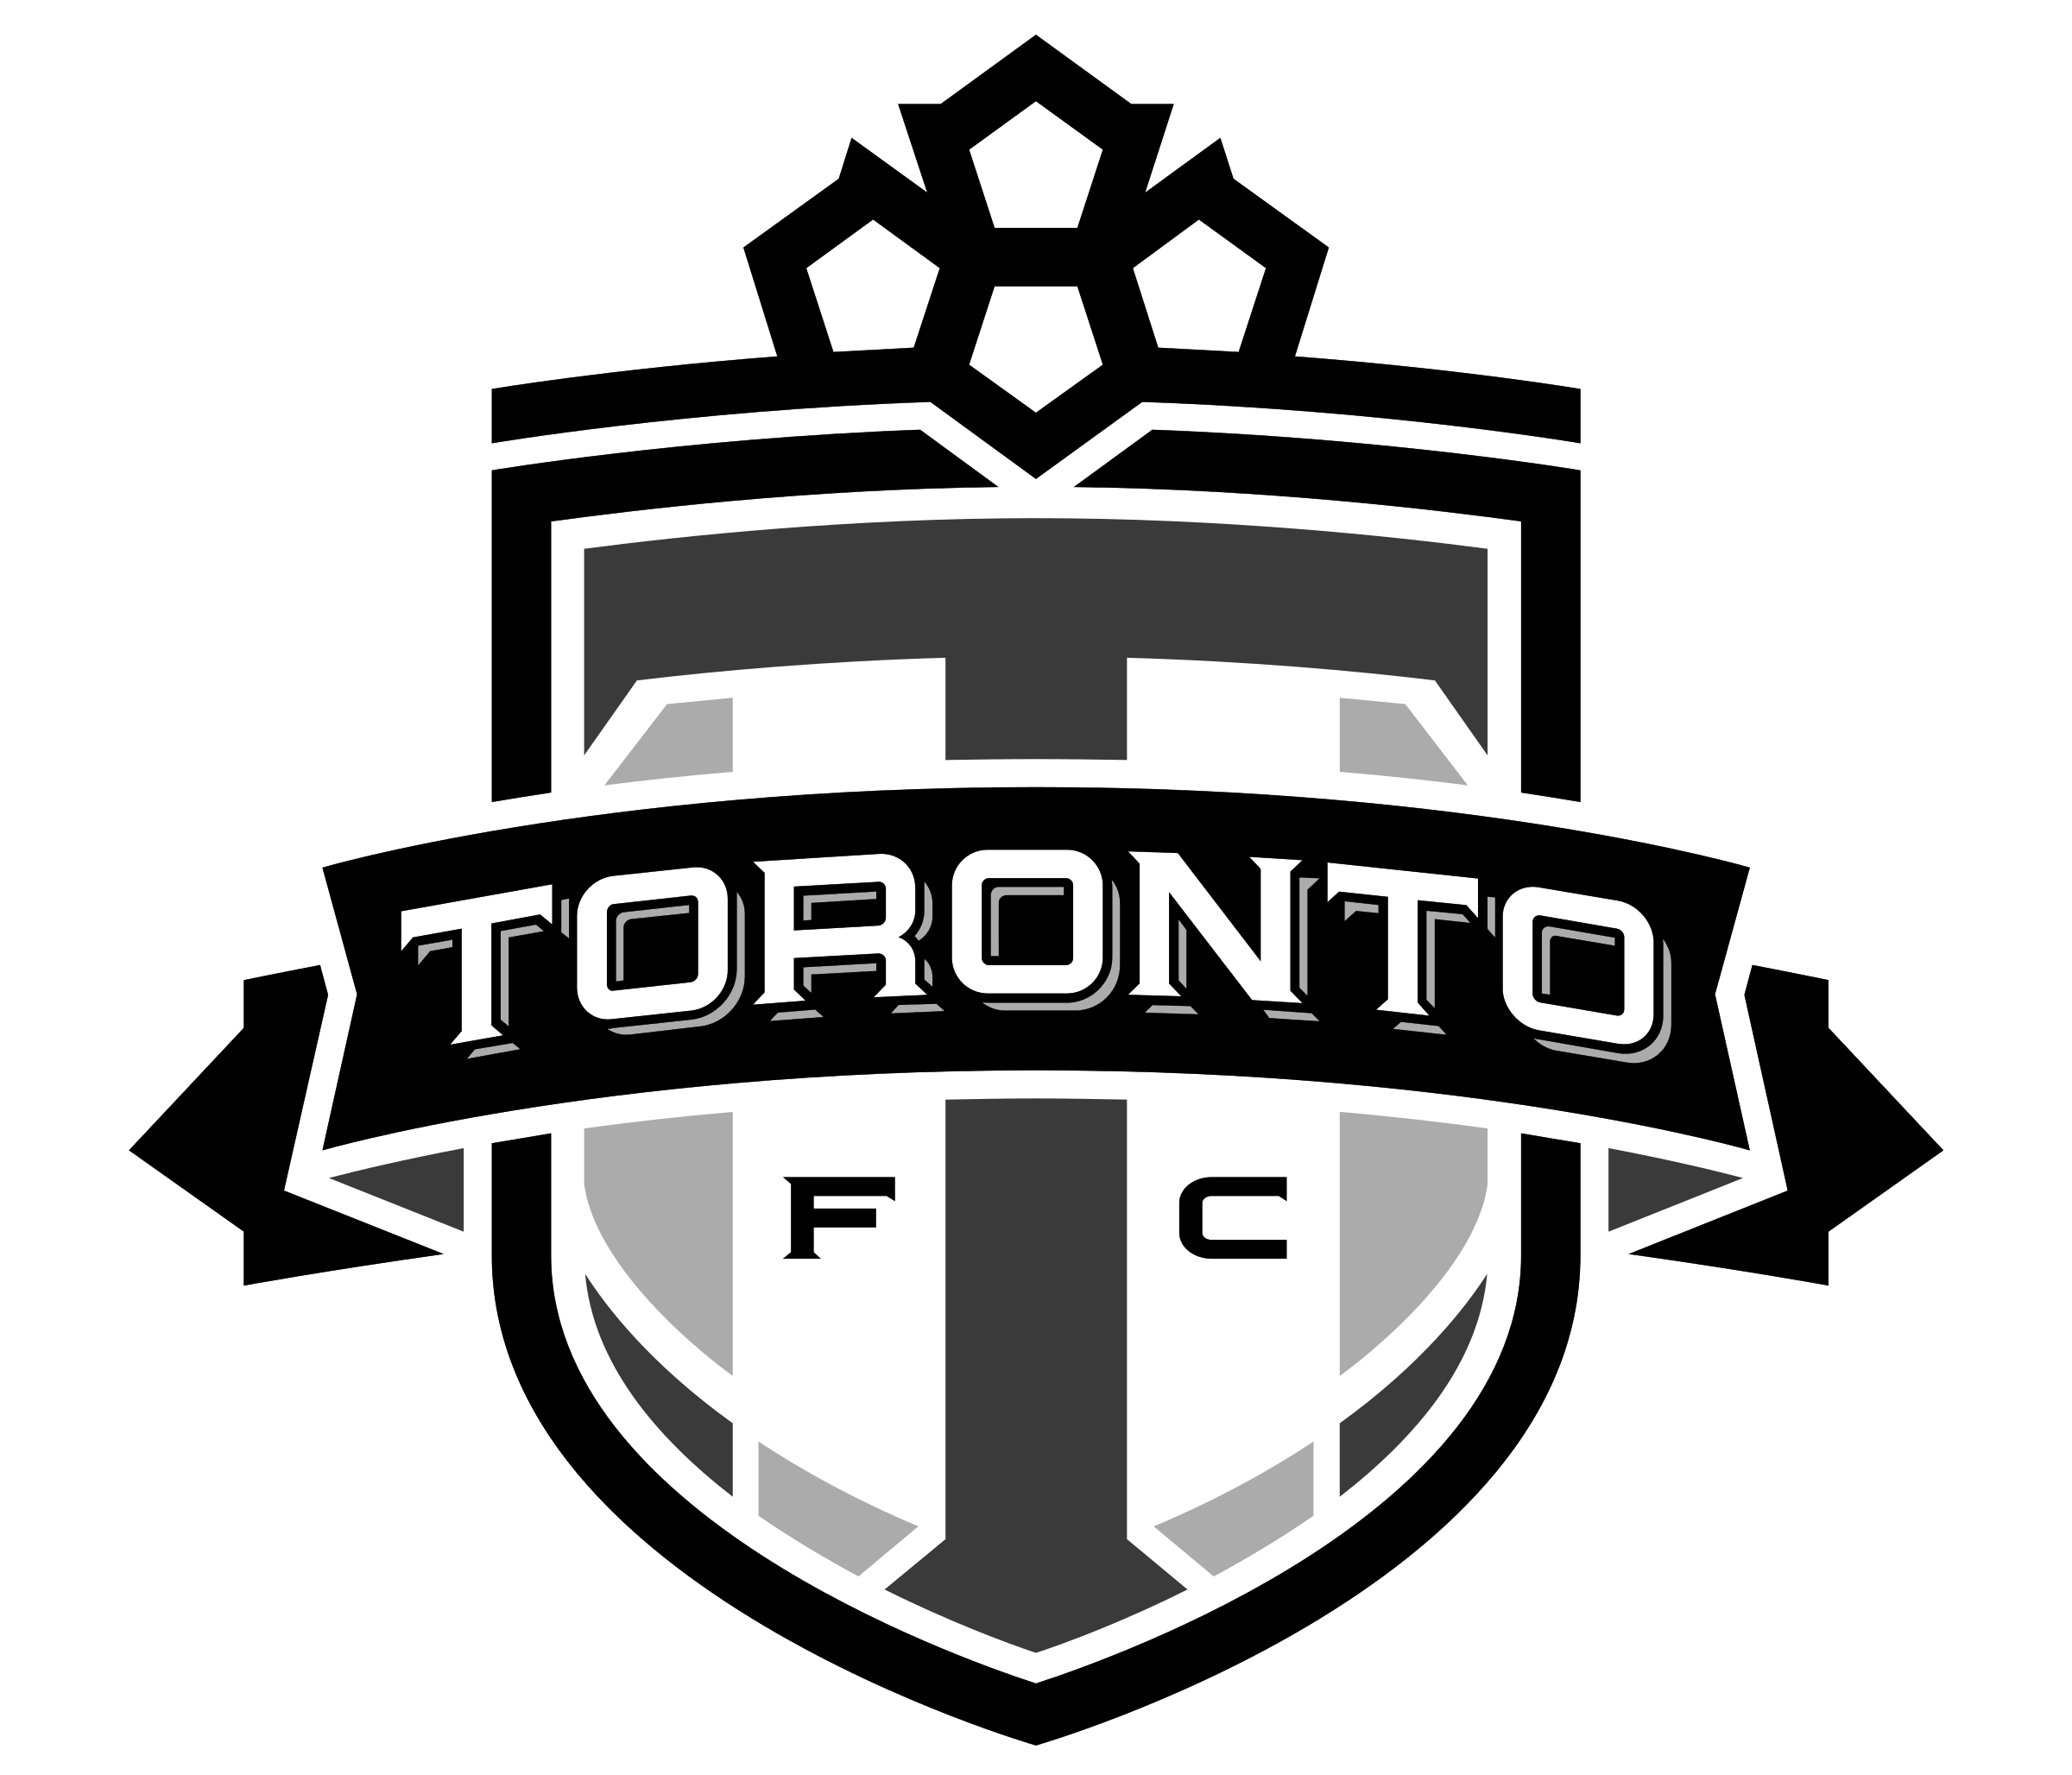 Toronto FC Logo - Toronto FC Logo PNG Transparent & SVG Vector - Freebie Supply